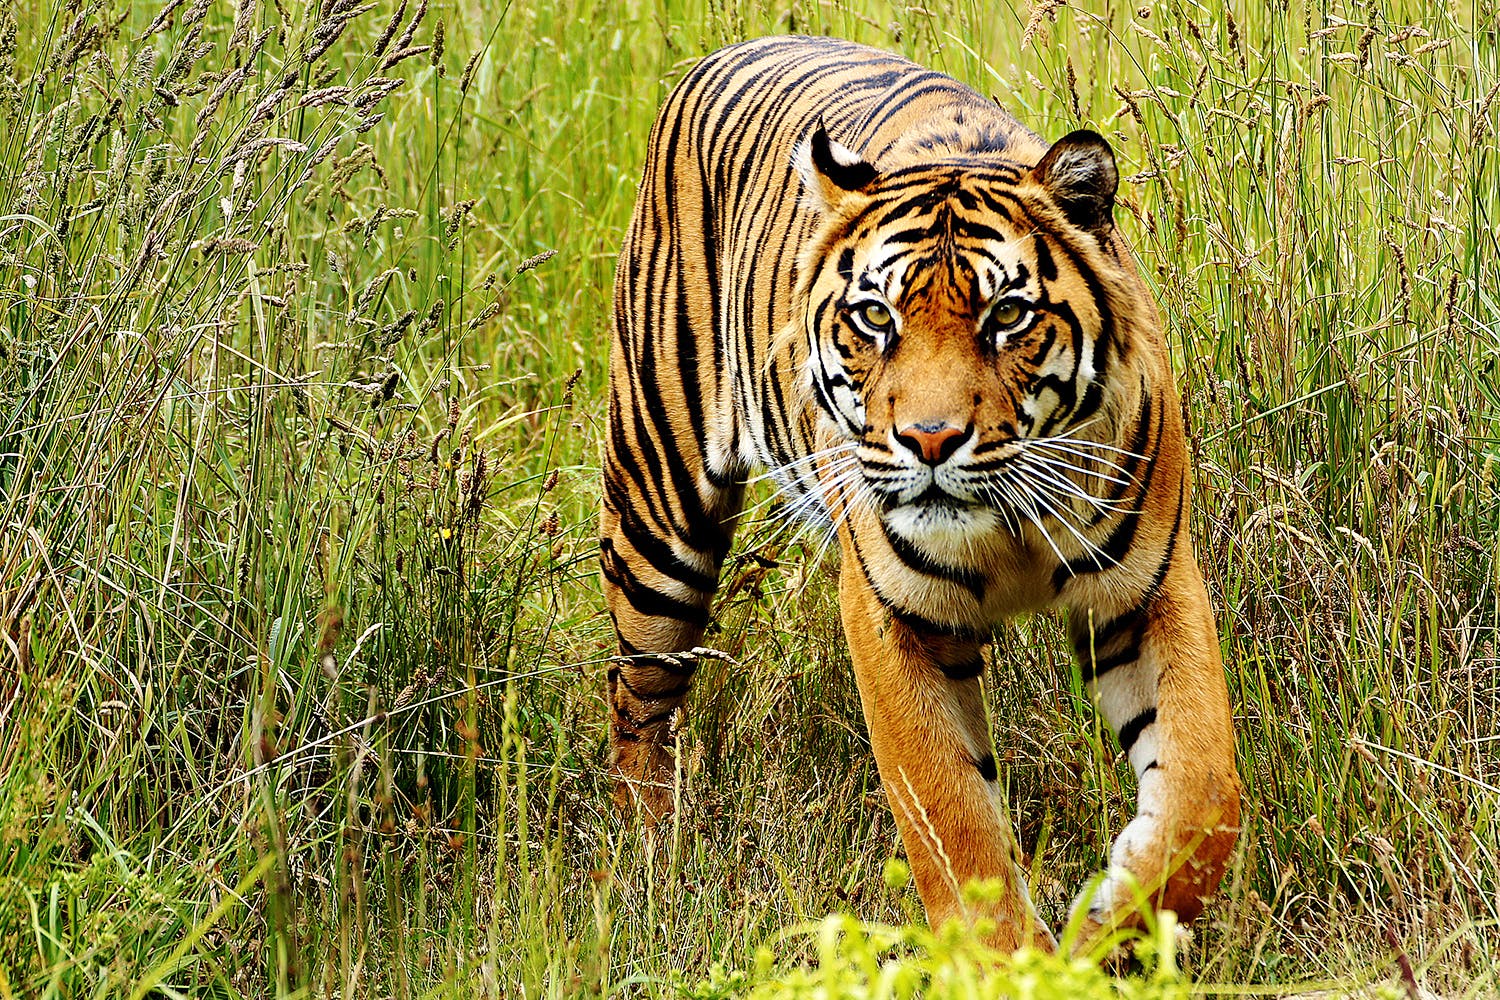 Tiger,Wildlife,Terrestrial animal,Mammal,Vertebrate,Bengal tiger,Felidae,Whiskers,Siberian tiger,Grass